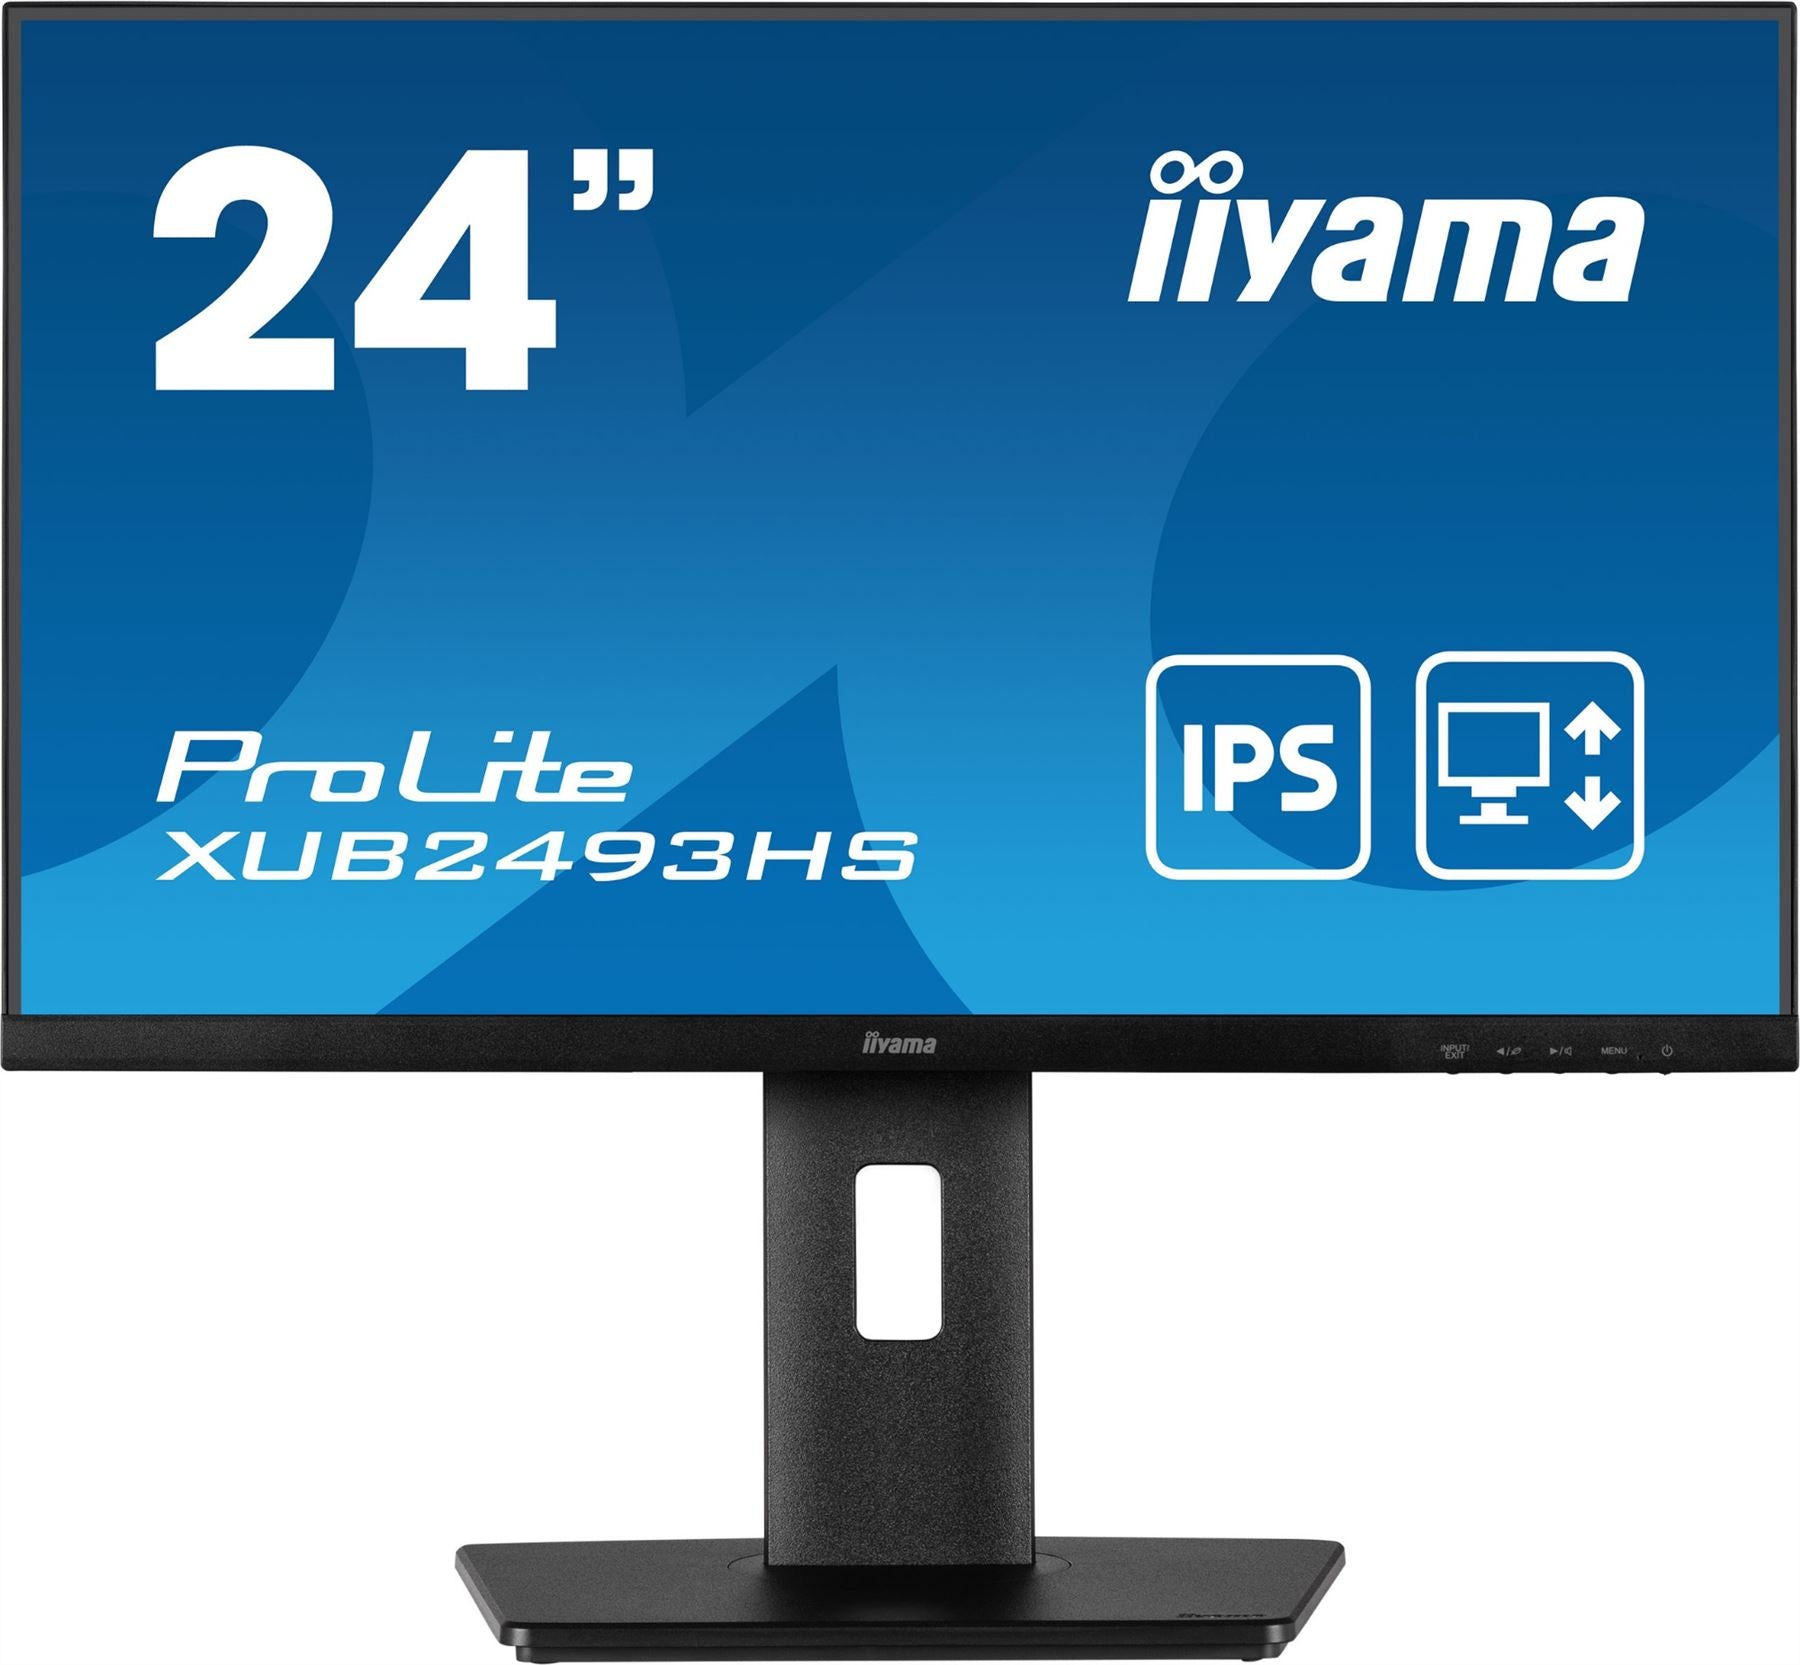 Monitors - Iiyama - Clove Technology